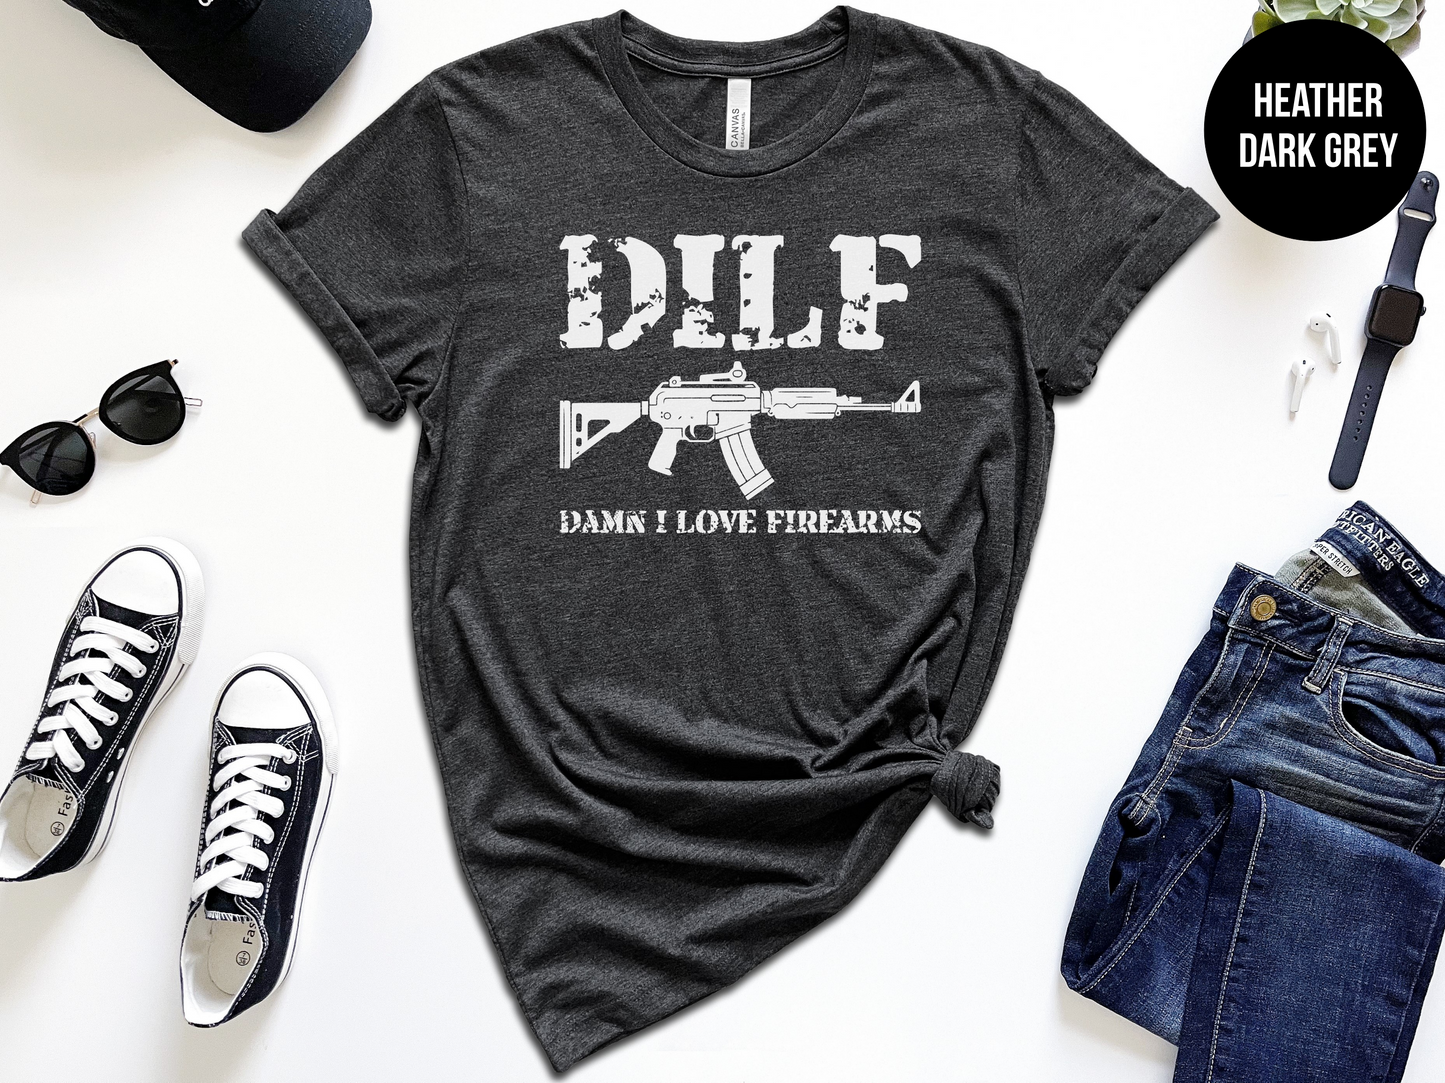 DILF: Damn I Love Firearms